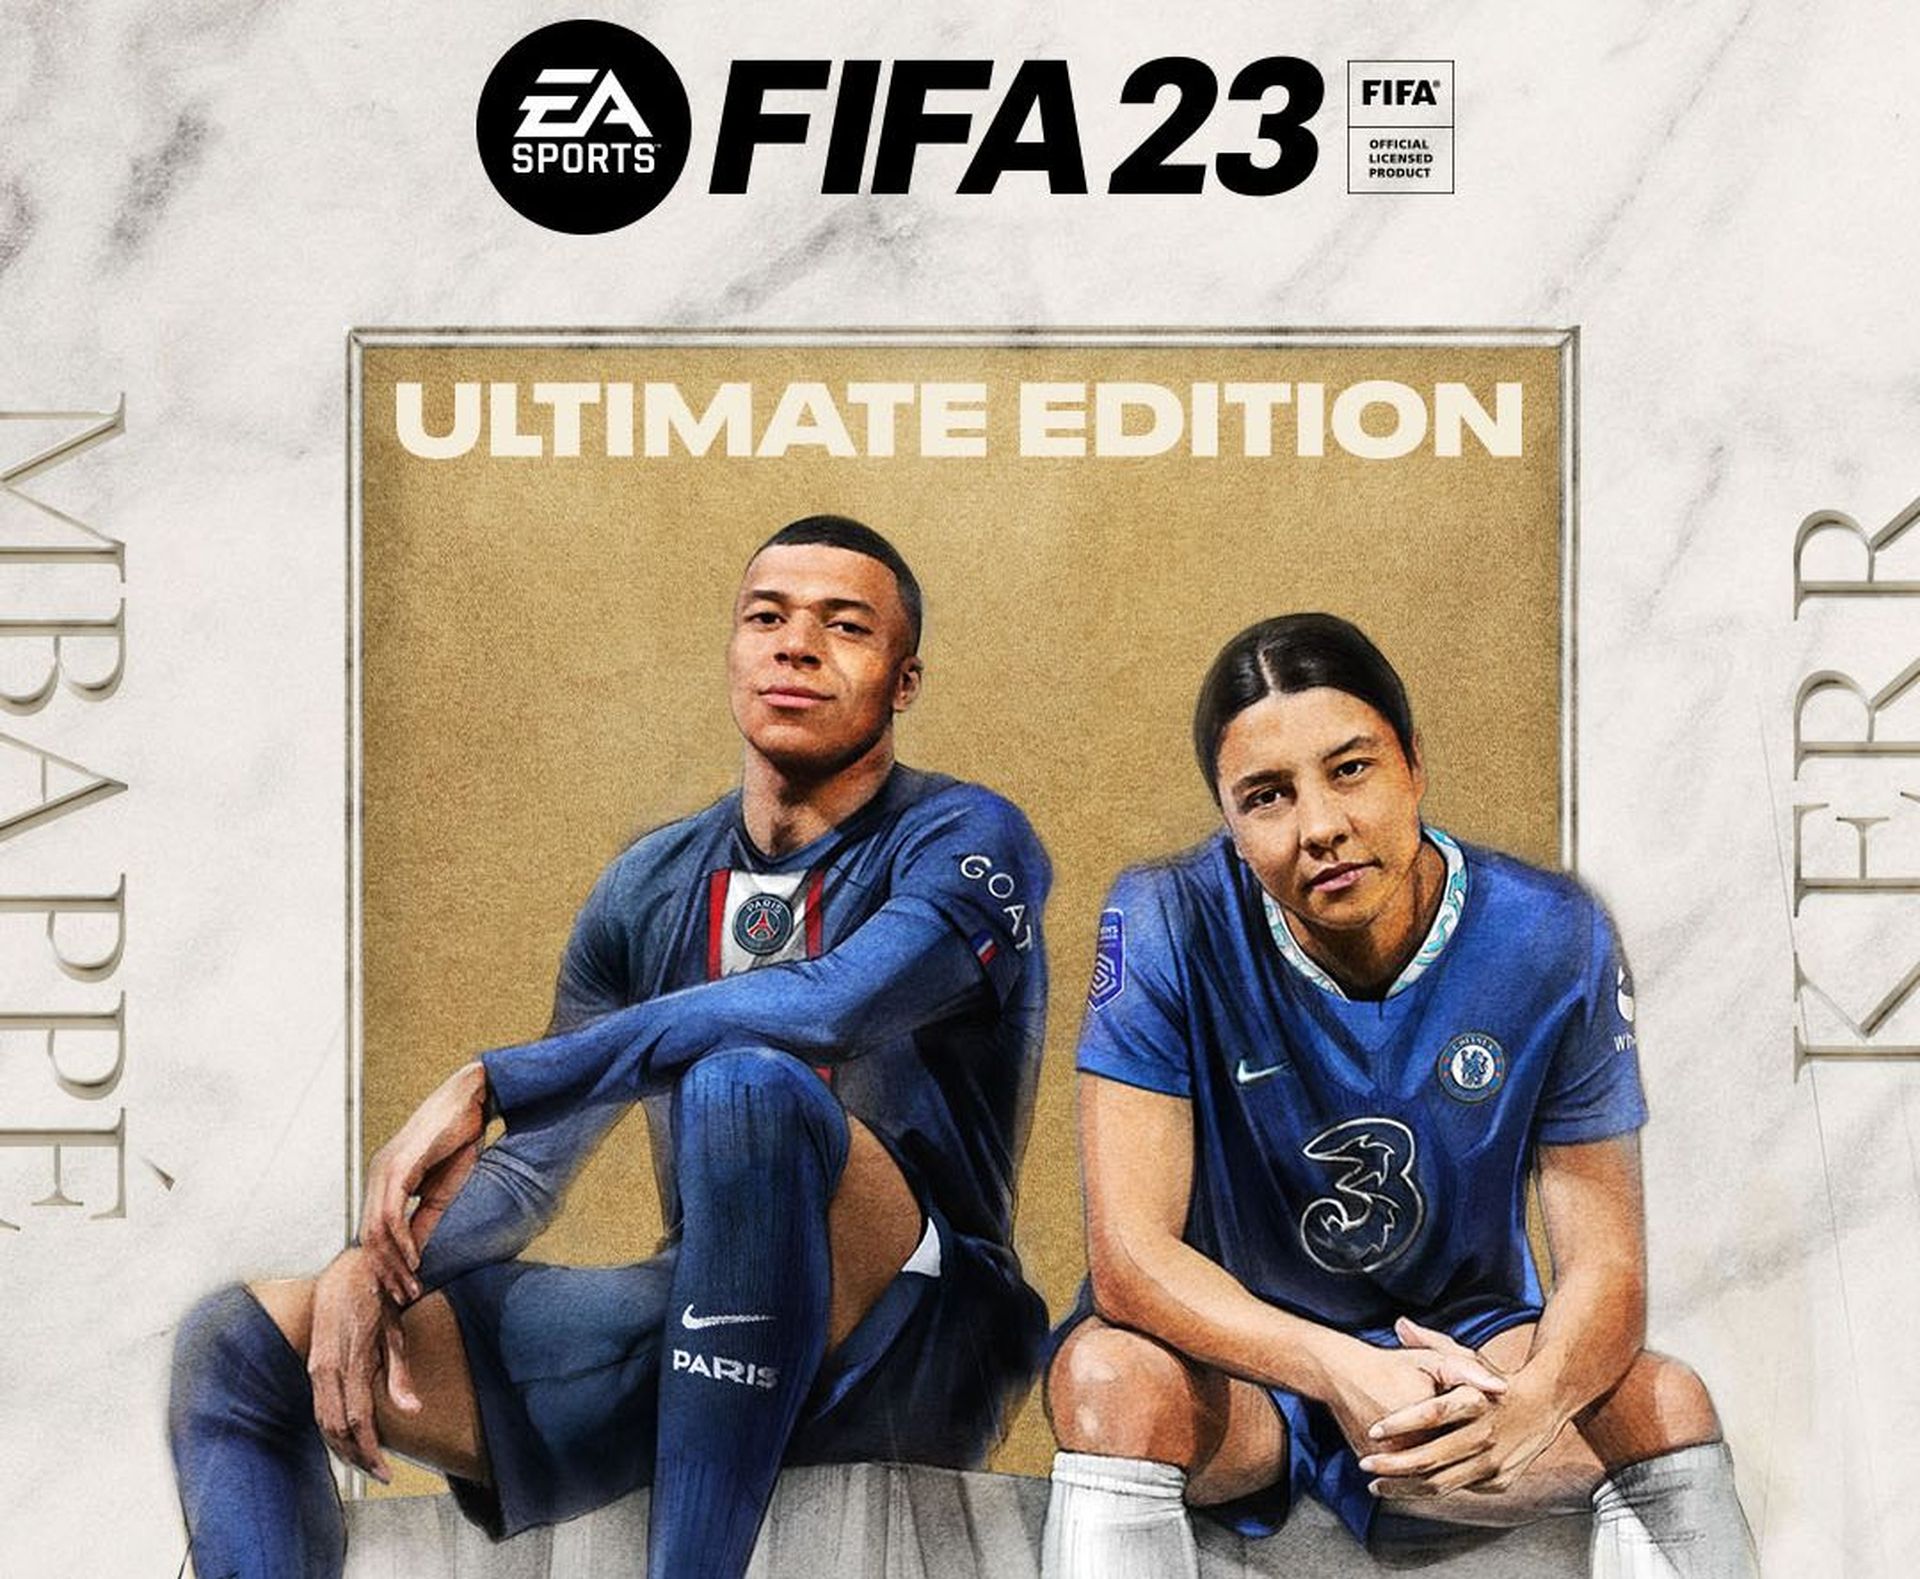 Releasedatum trailer FIFA 23 bekend